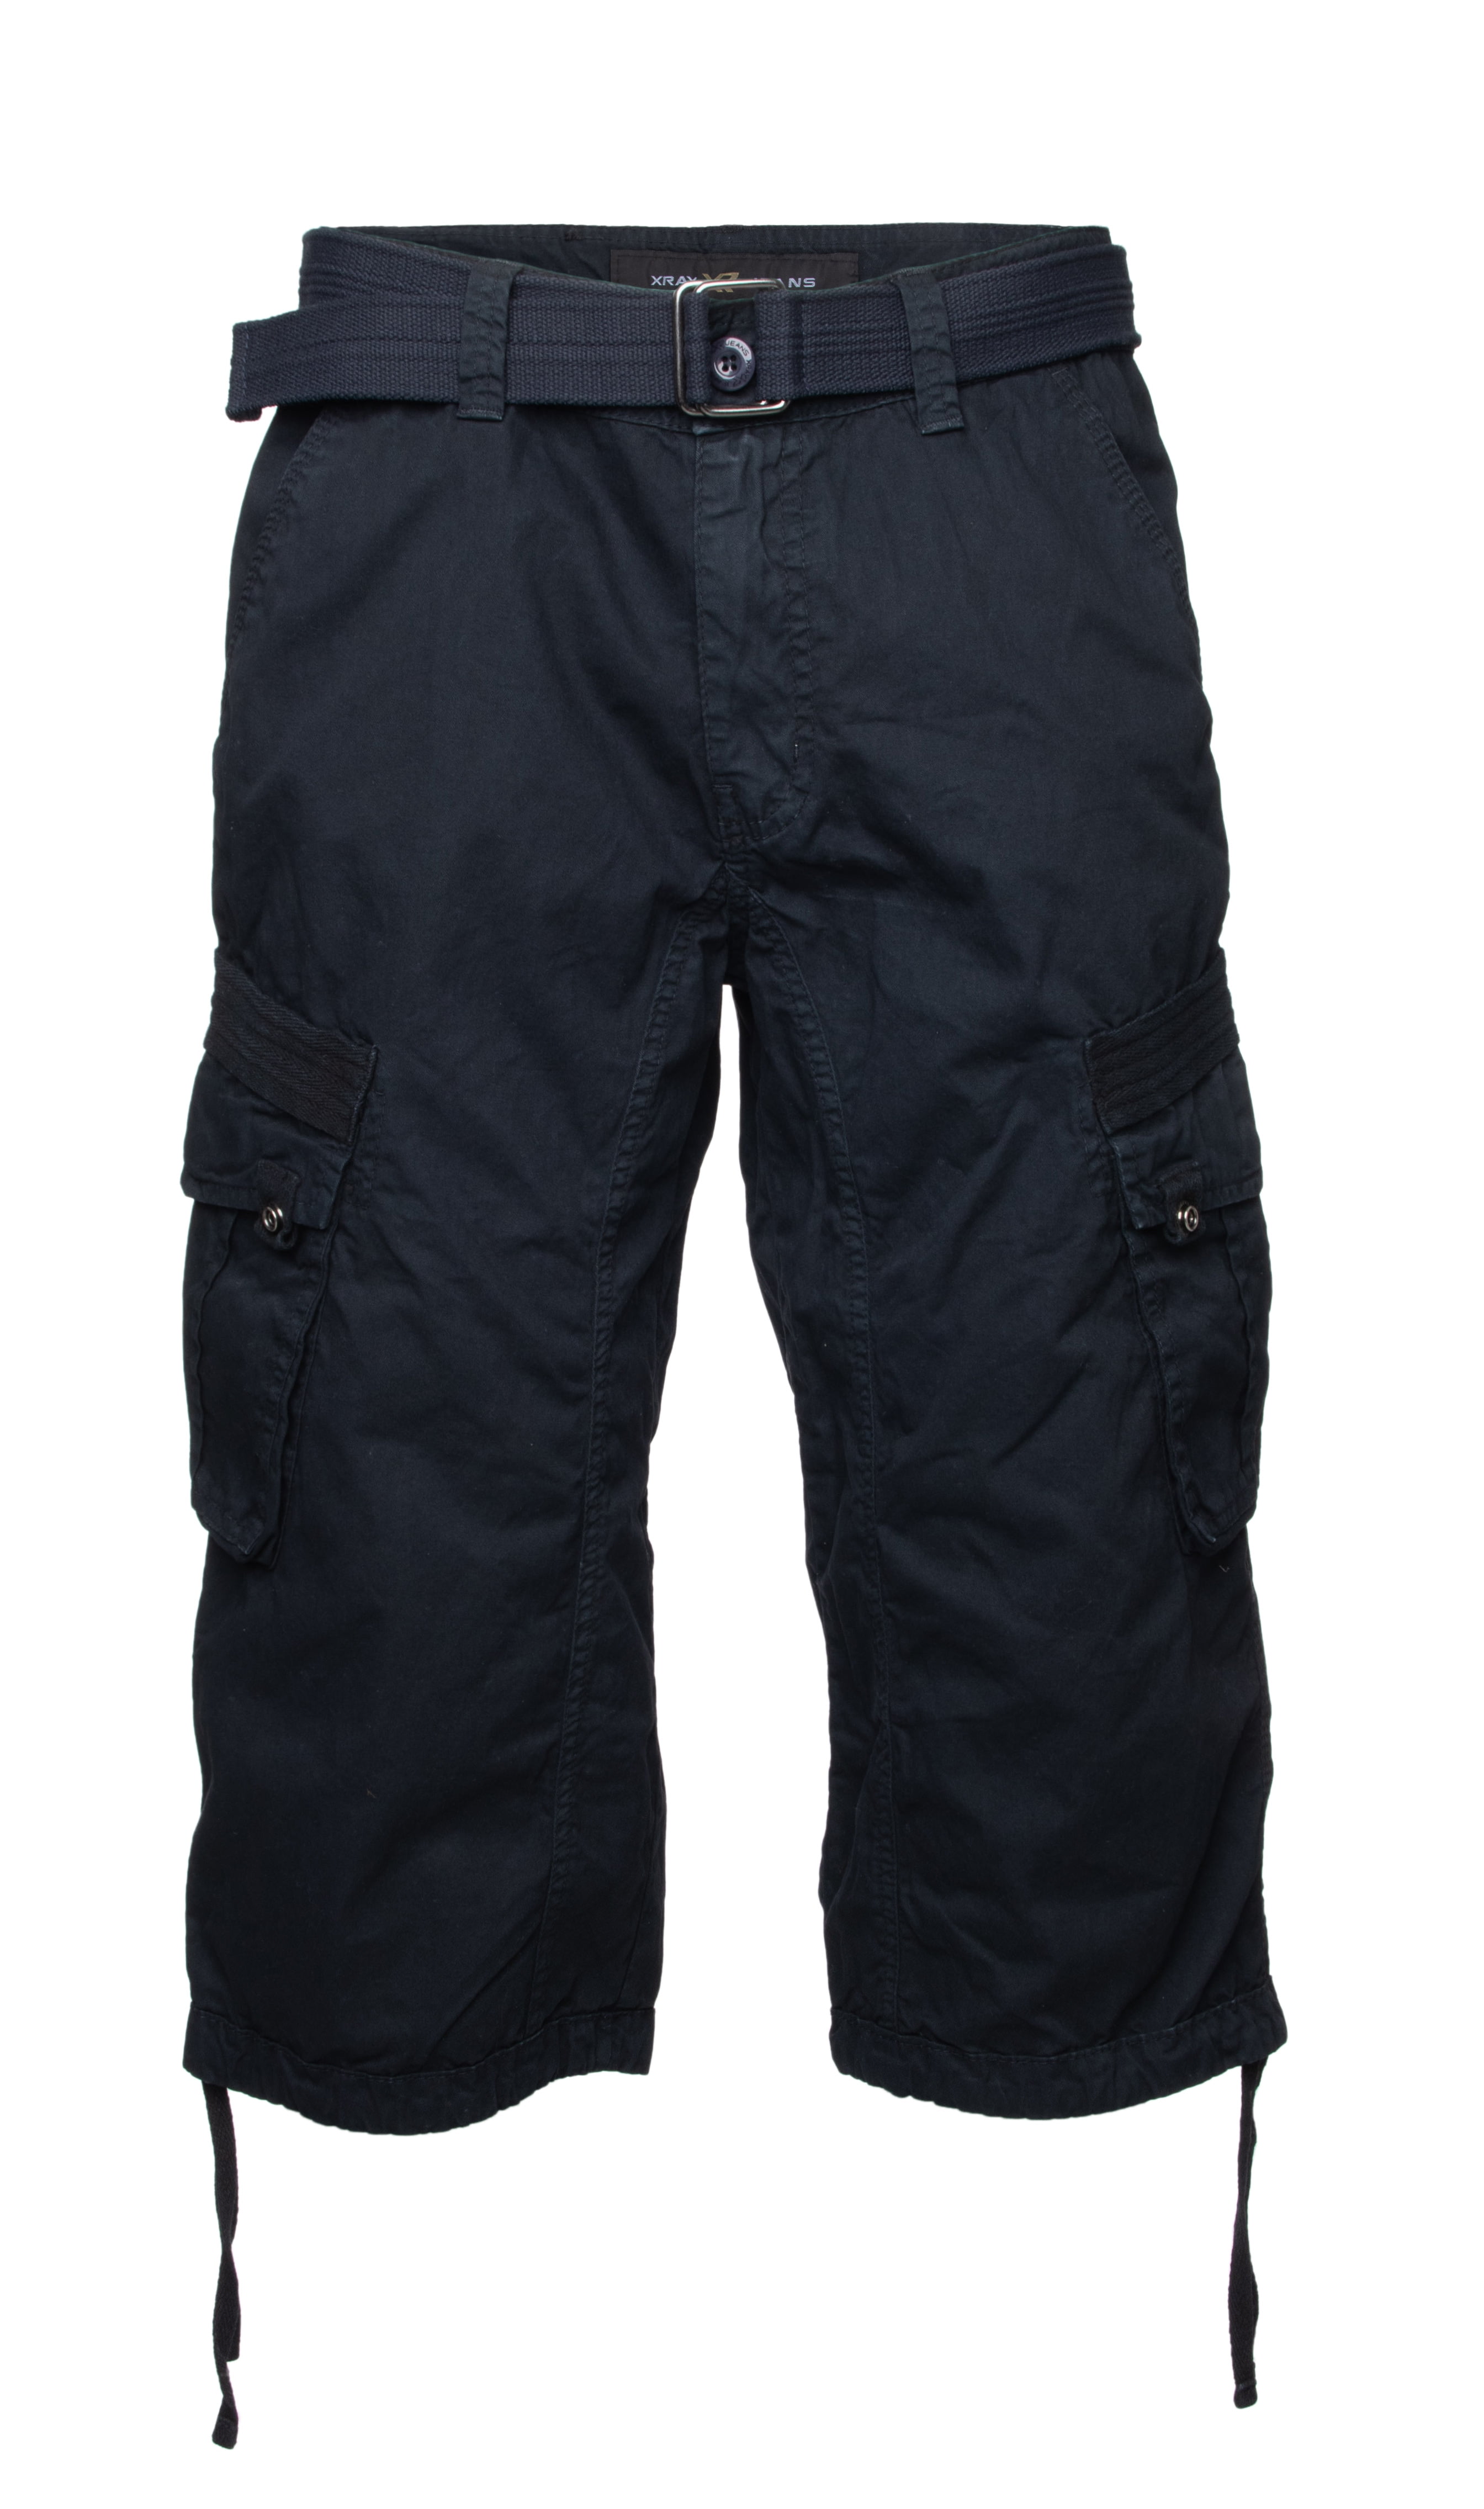 X RAY Men's Belted Tactical Cargo Long Shorts 18 Inseam Below Knee Length Multi Pocket 3/4 Capri Pants 